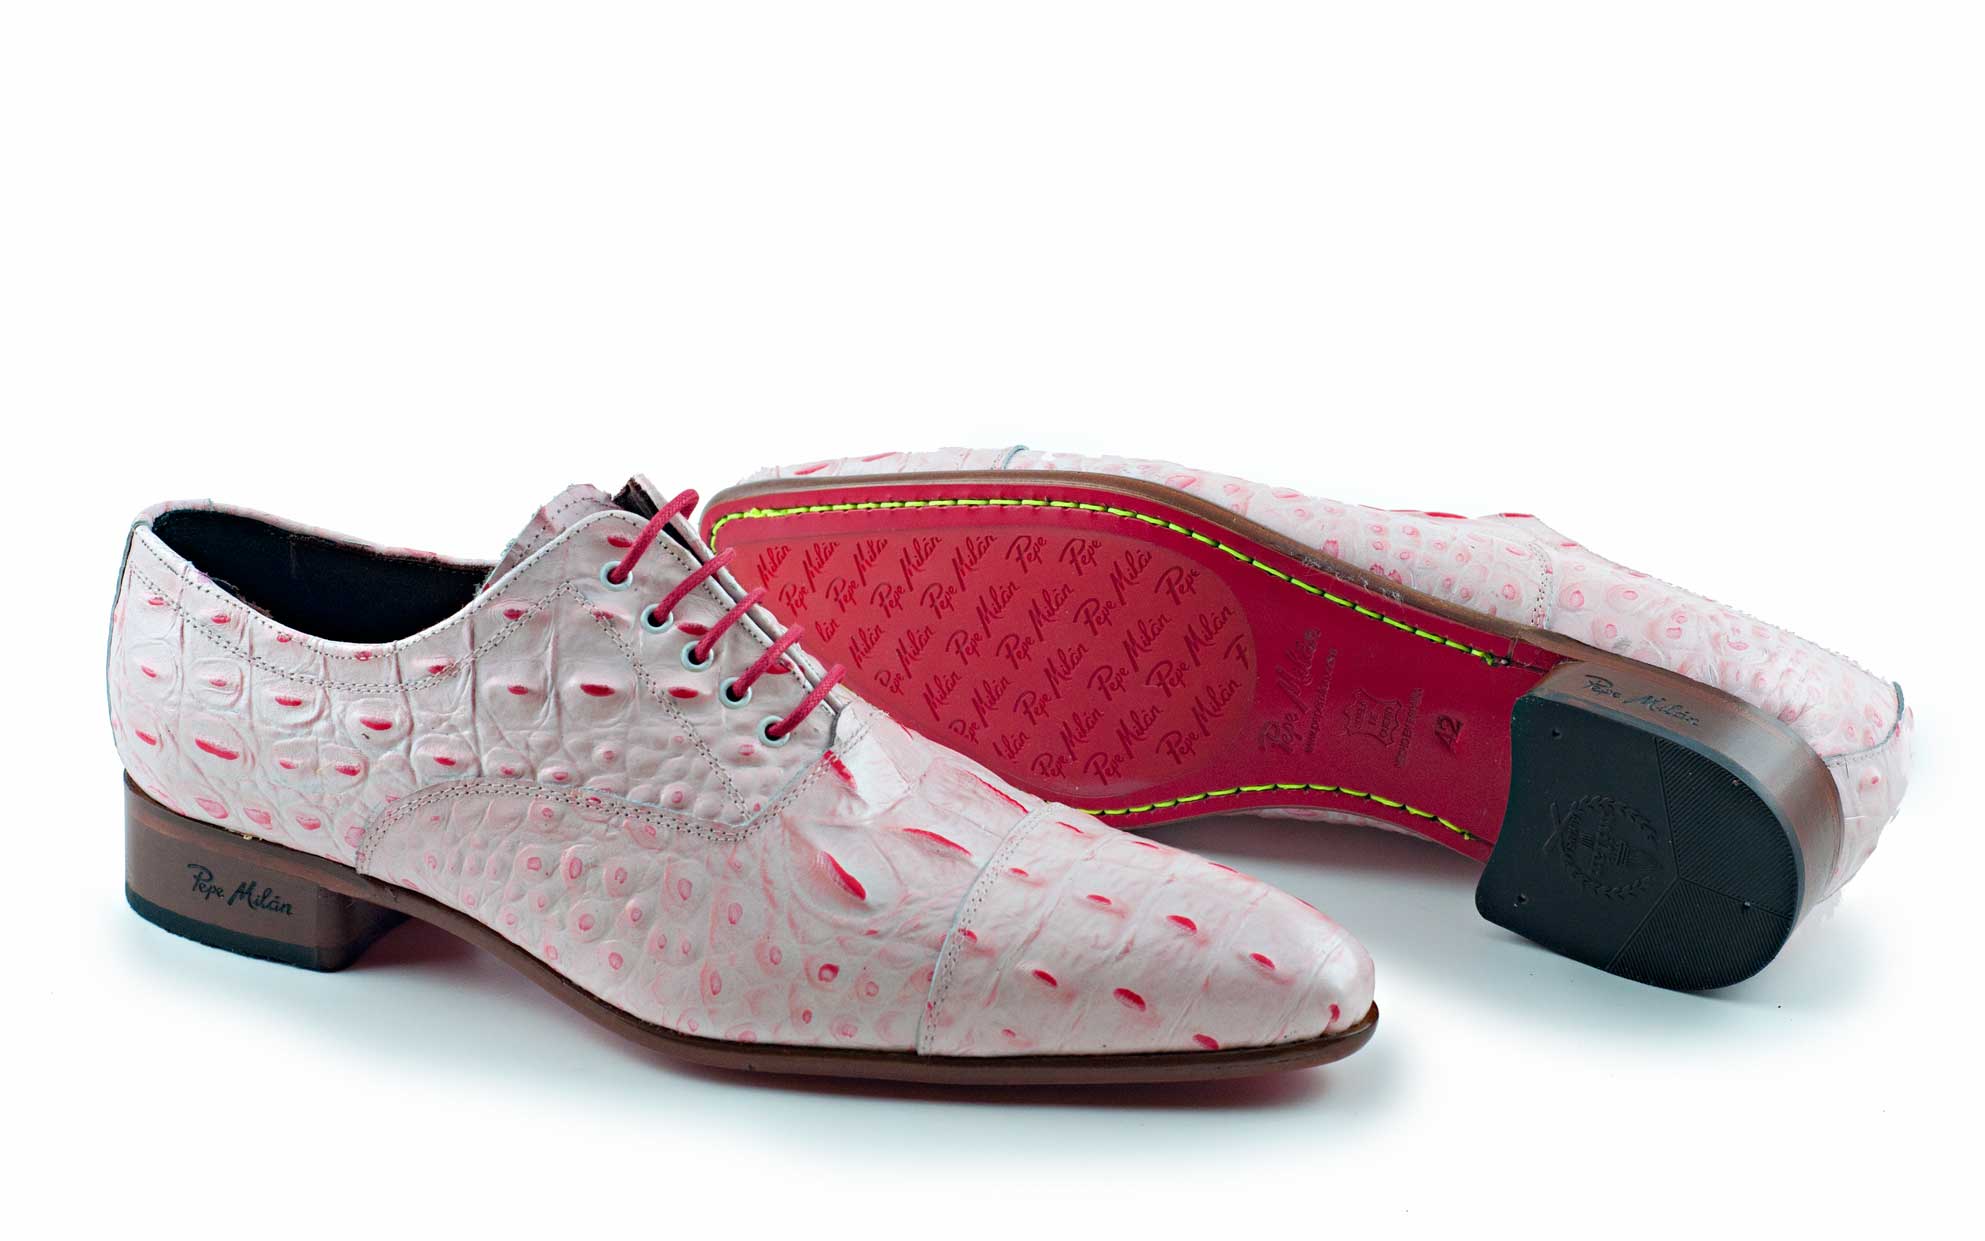 Cayman shoe model, made in emi double salmon